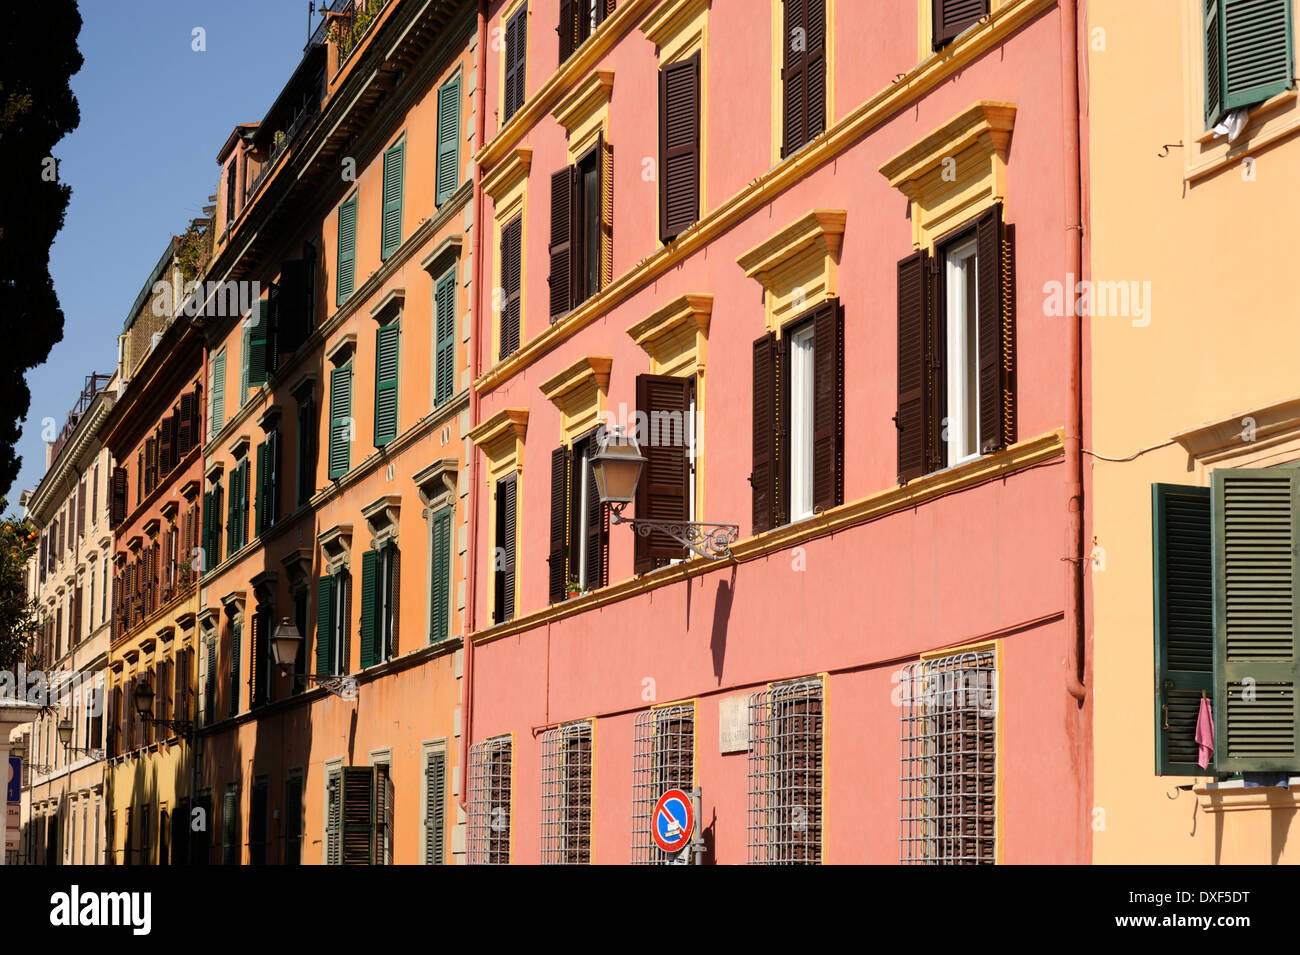 Italia, Roma, casas coloridas Foto de stock